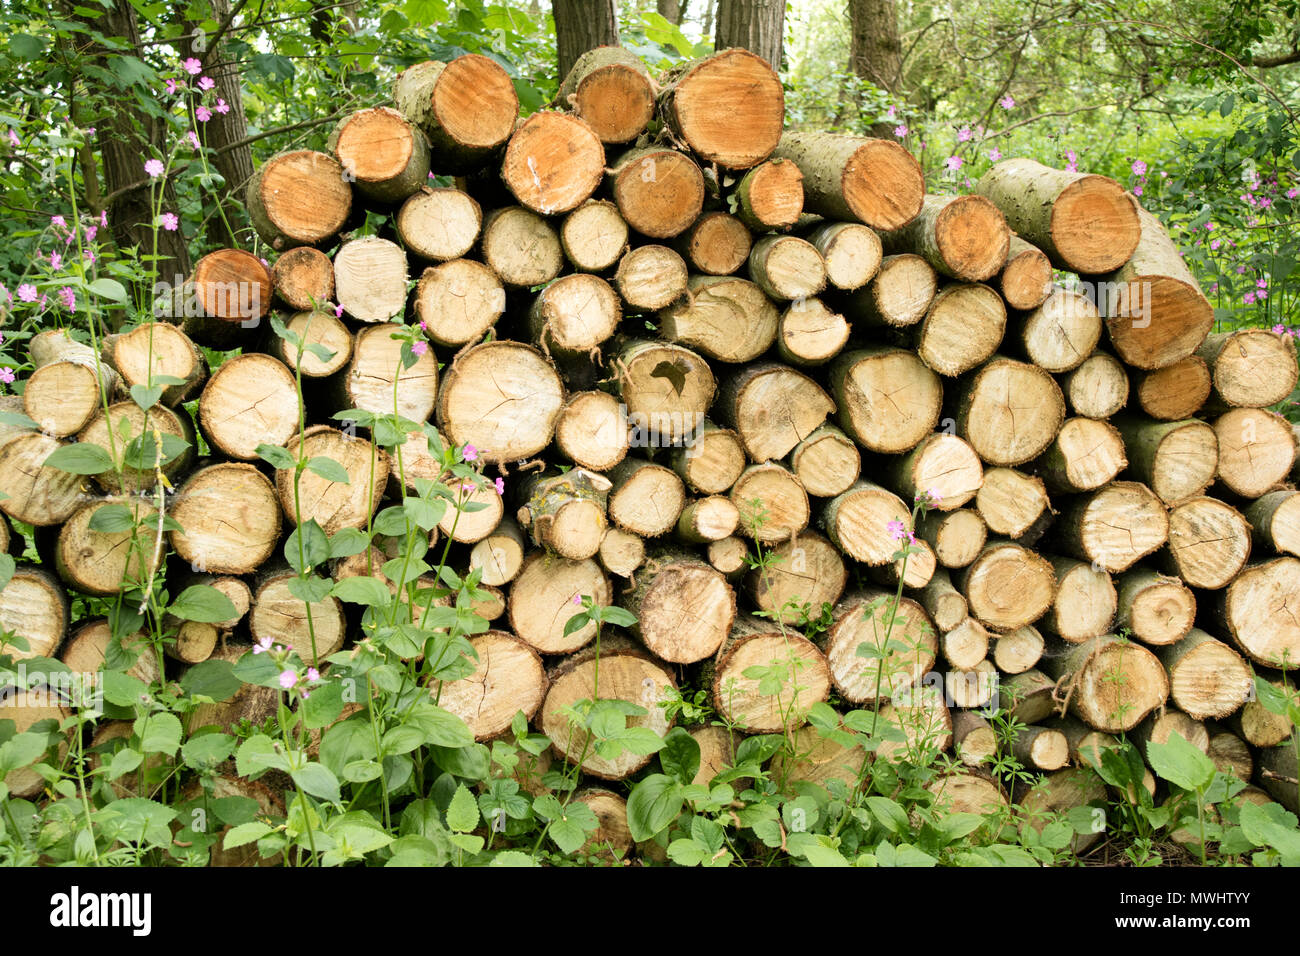 Logs stacked as a wildlife habitat, England, UK Stock Photo